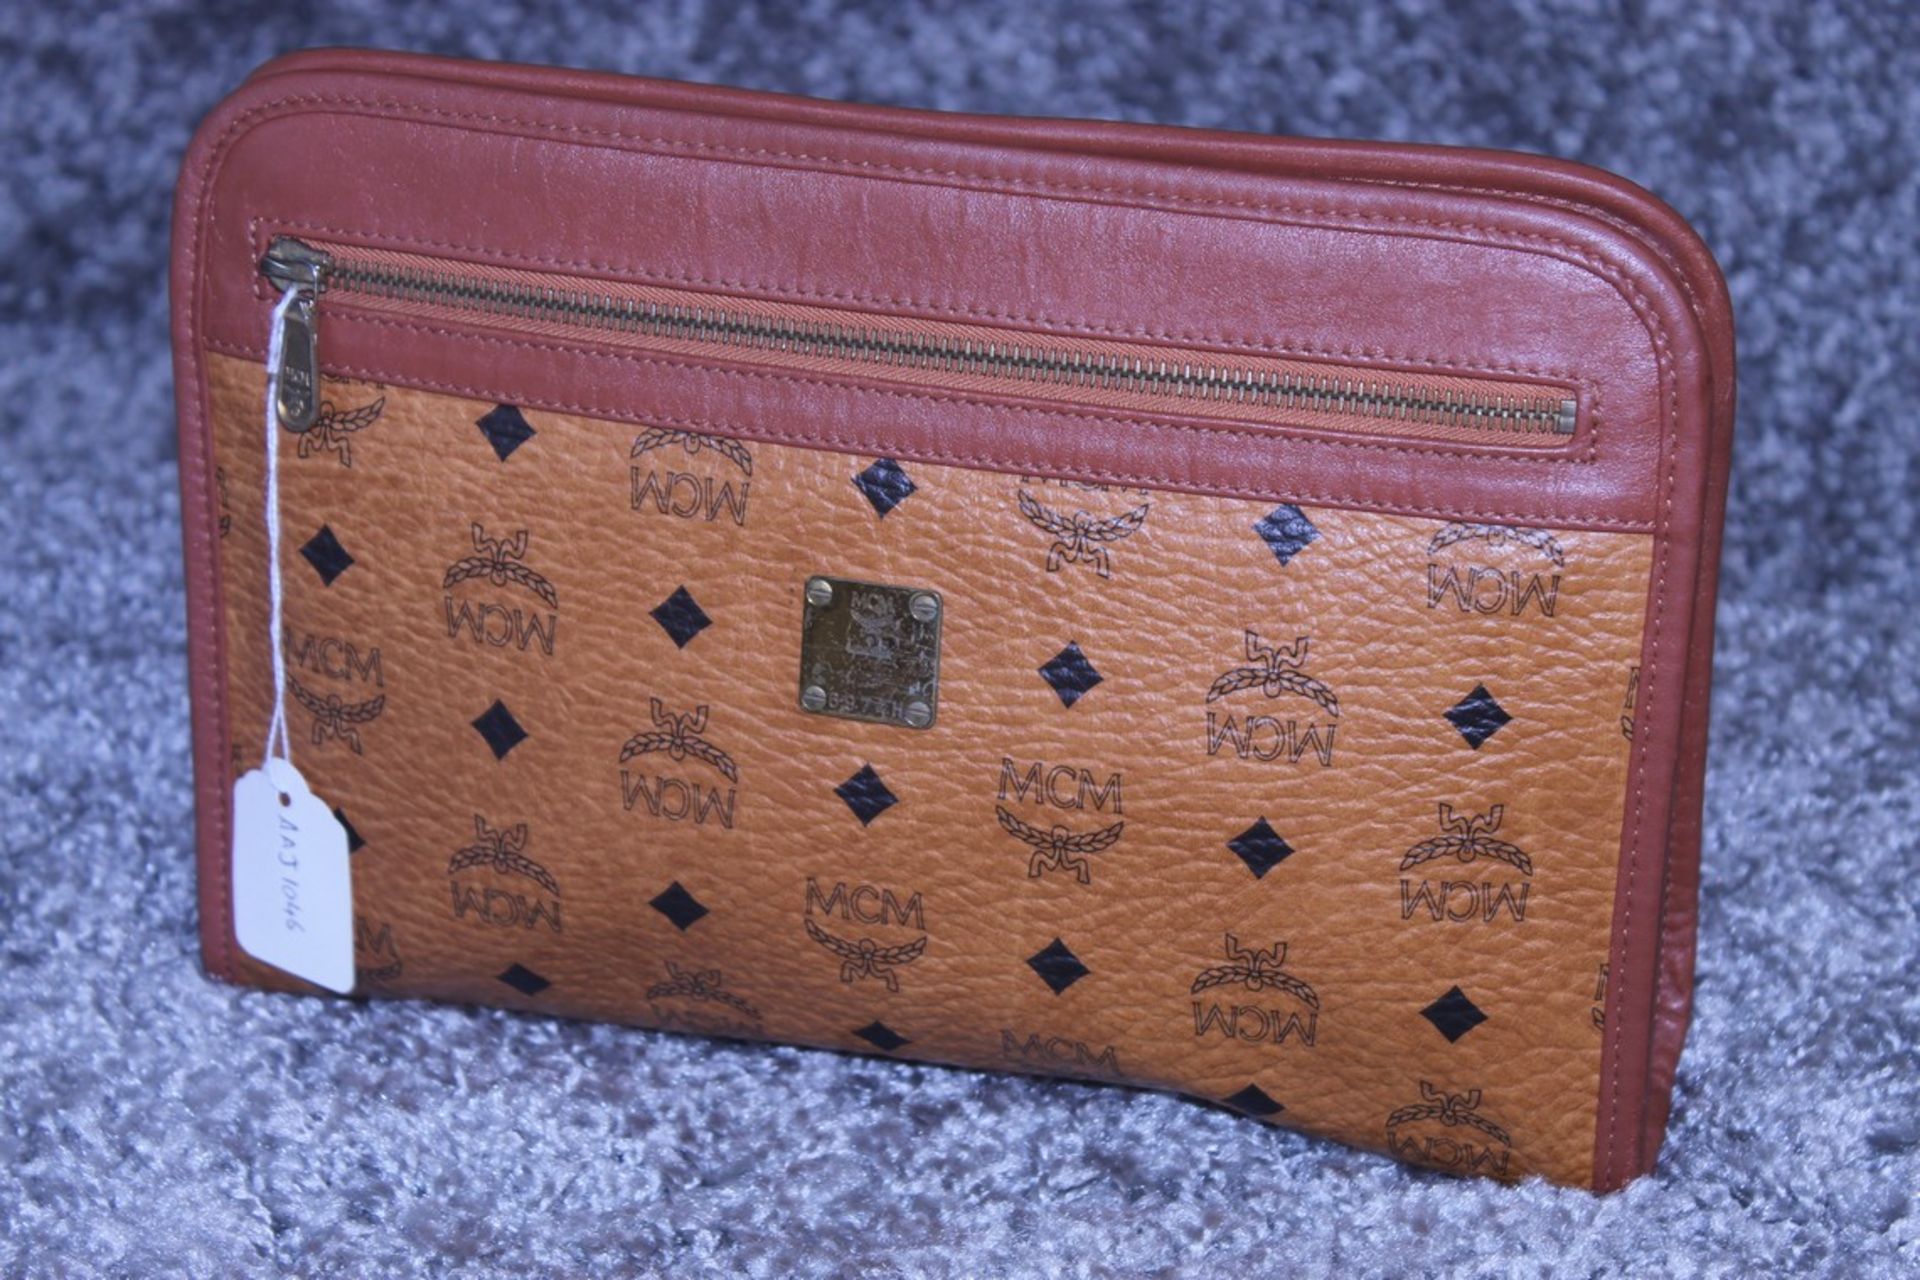 Rrp £300 MCM Calf Leather Cognac Monogramme Gold Vachetta Vintage Clutch Handbag. Production Code - Image 3 of 5